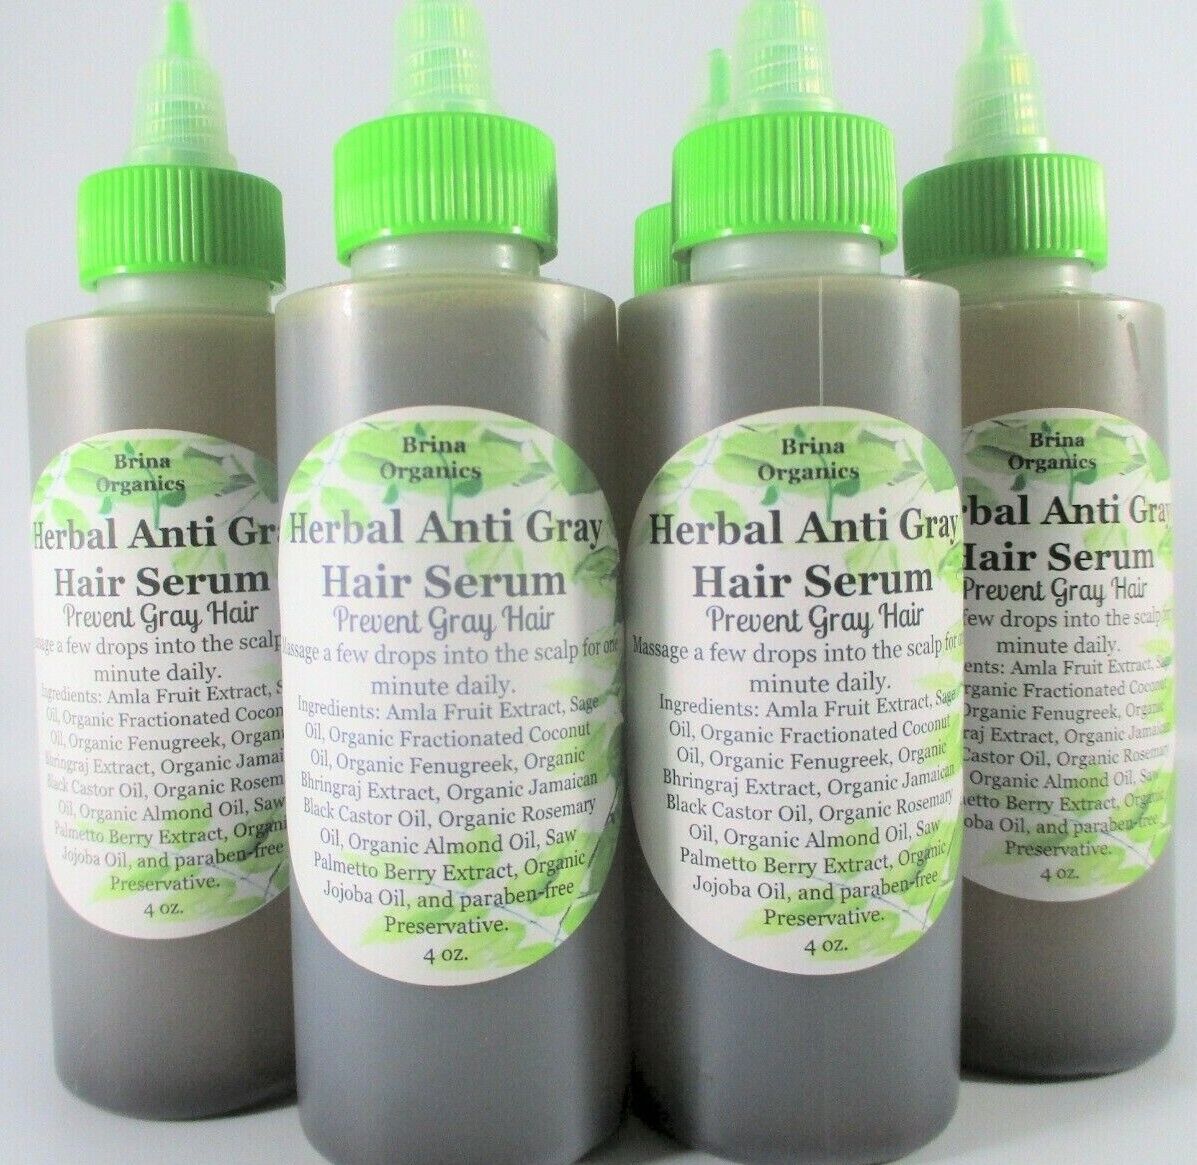 Herbal Anti Gray Hair Serum, Natural Hair Product, Brina Organics